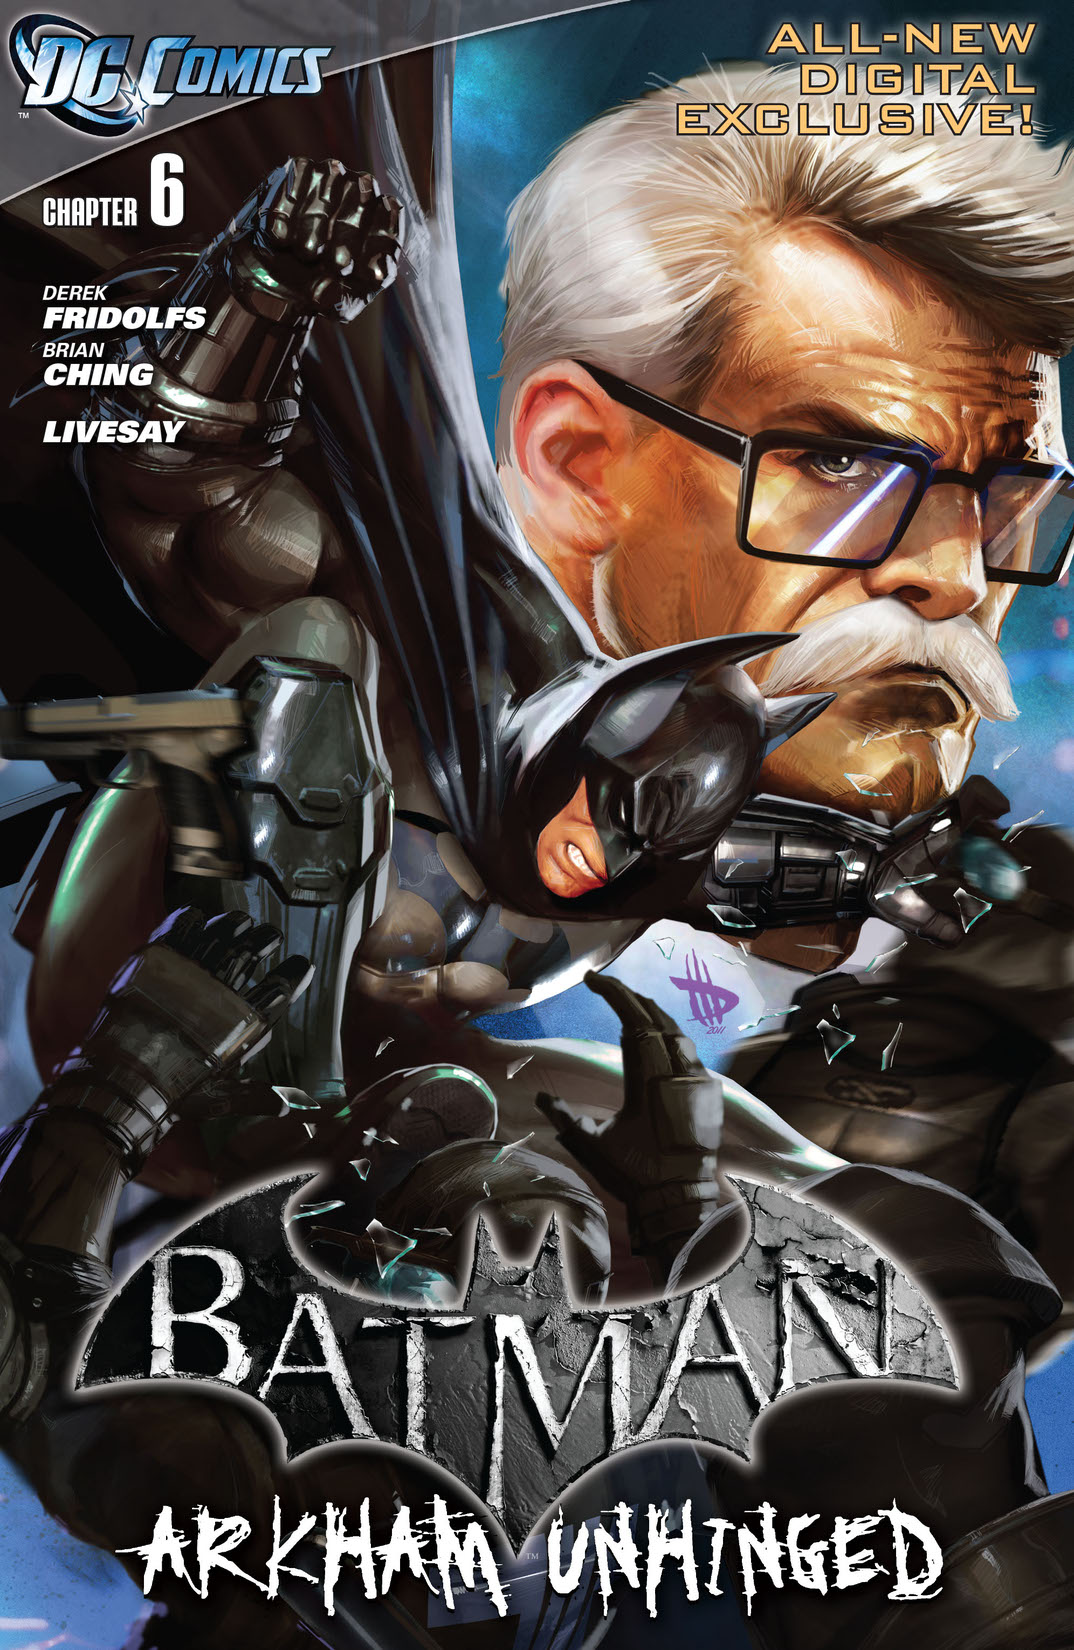 Batman: Arkham Unhinged #6 preview images